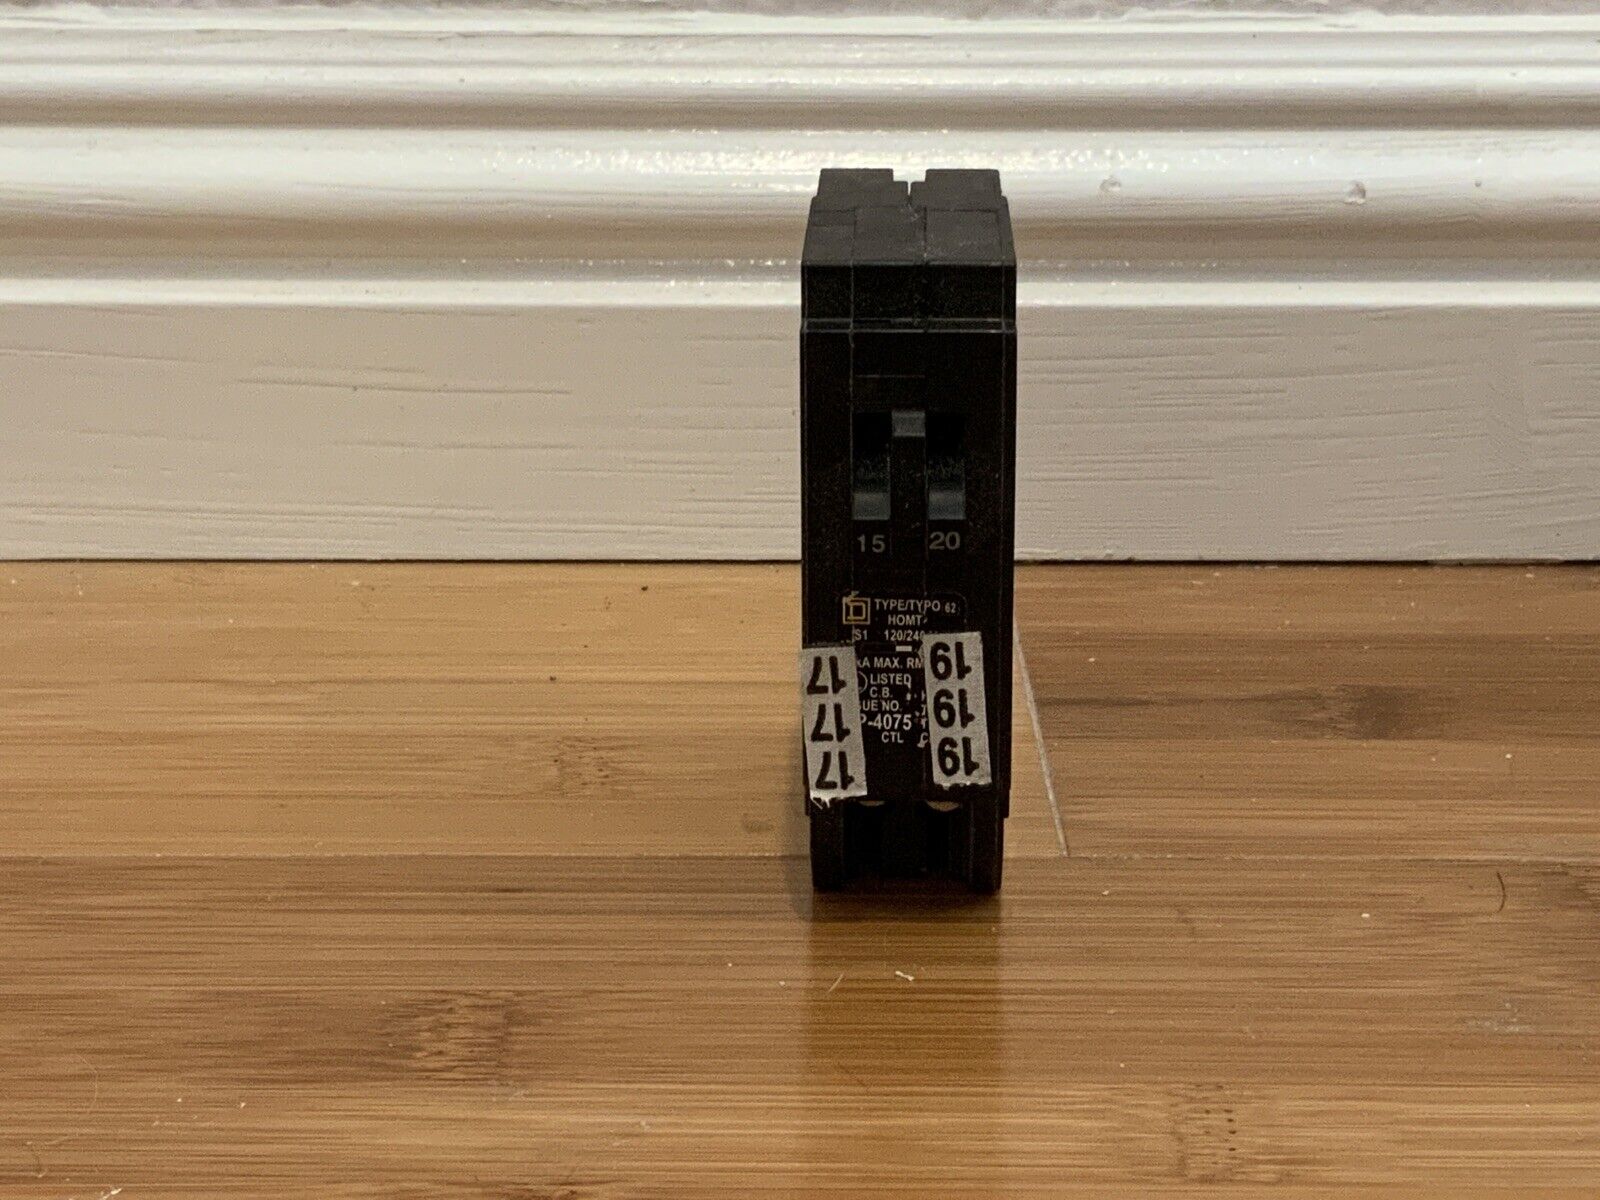 Square D HOMT1520CP 20 A Miniature Circuit Breaker for sale online